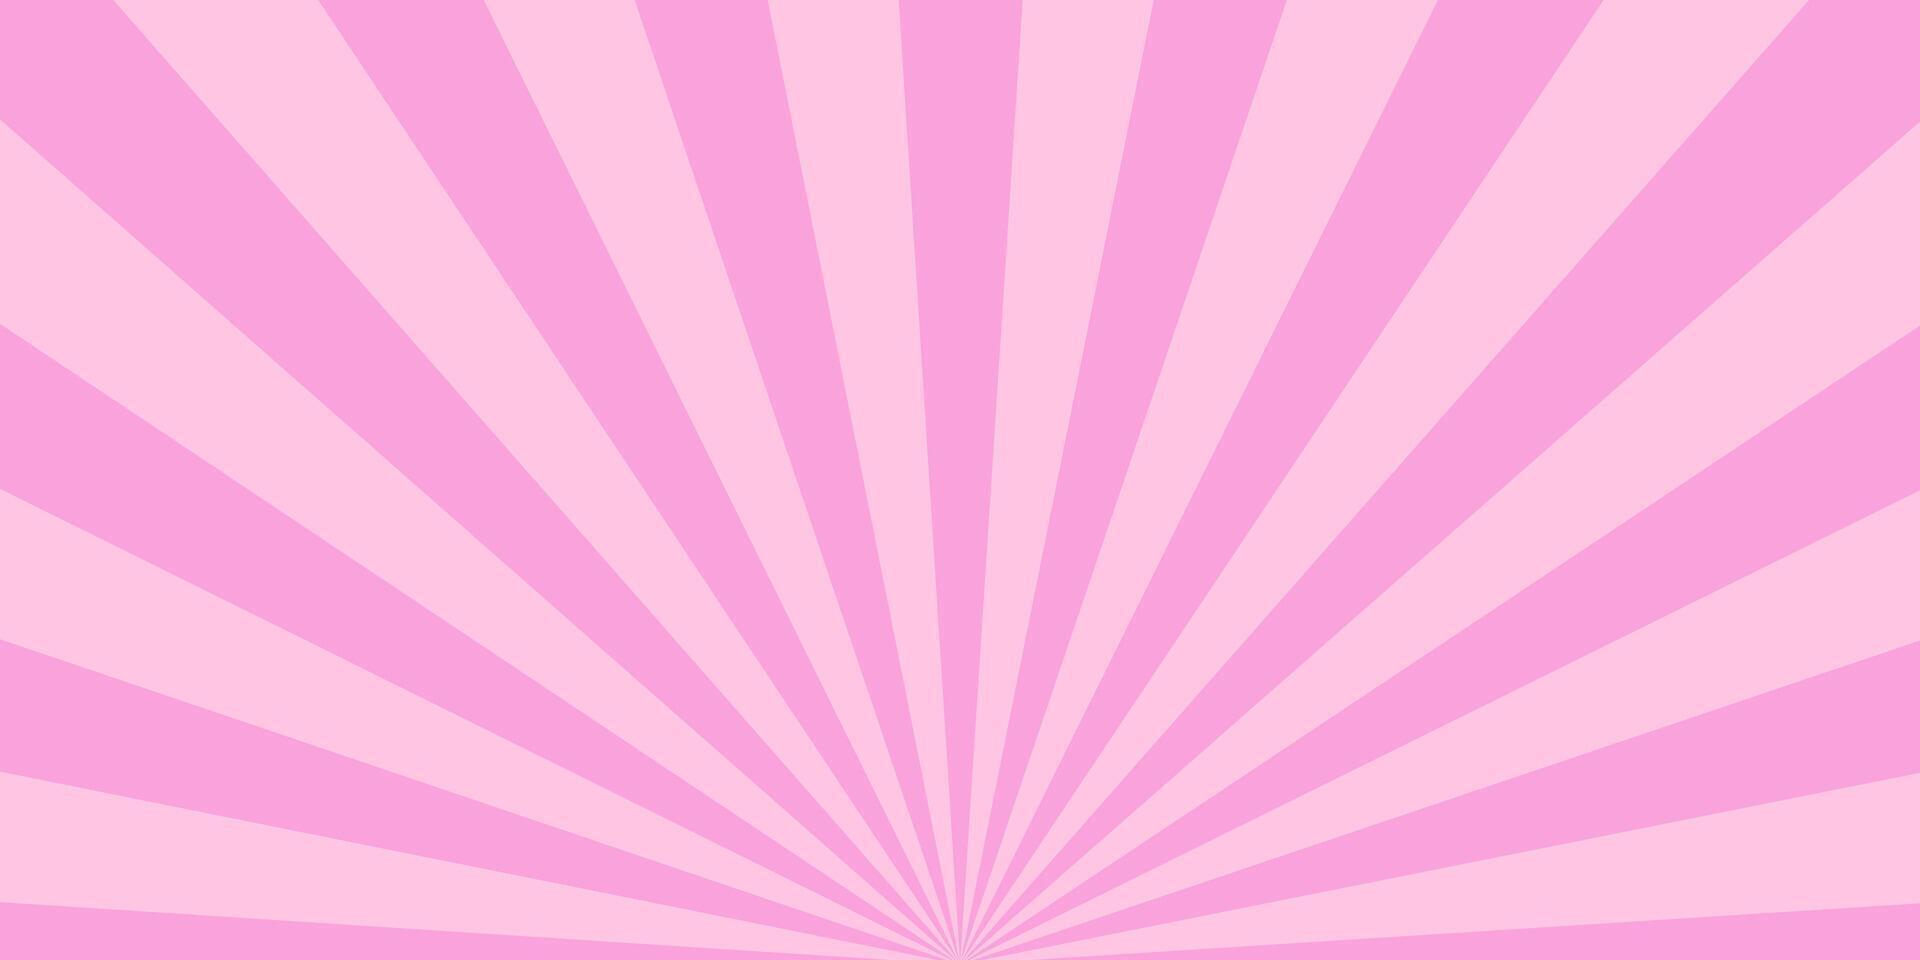 Sunrise sunbeam rays, pink lines background, light vector